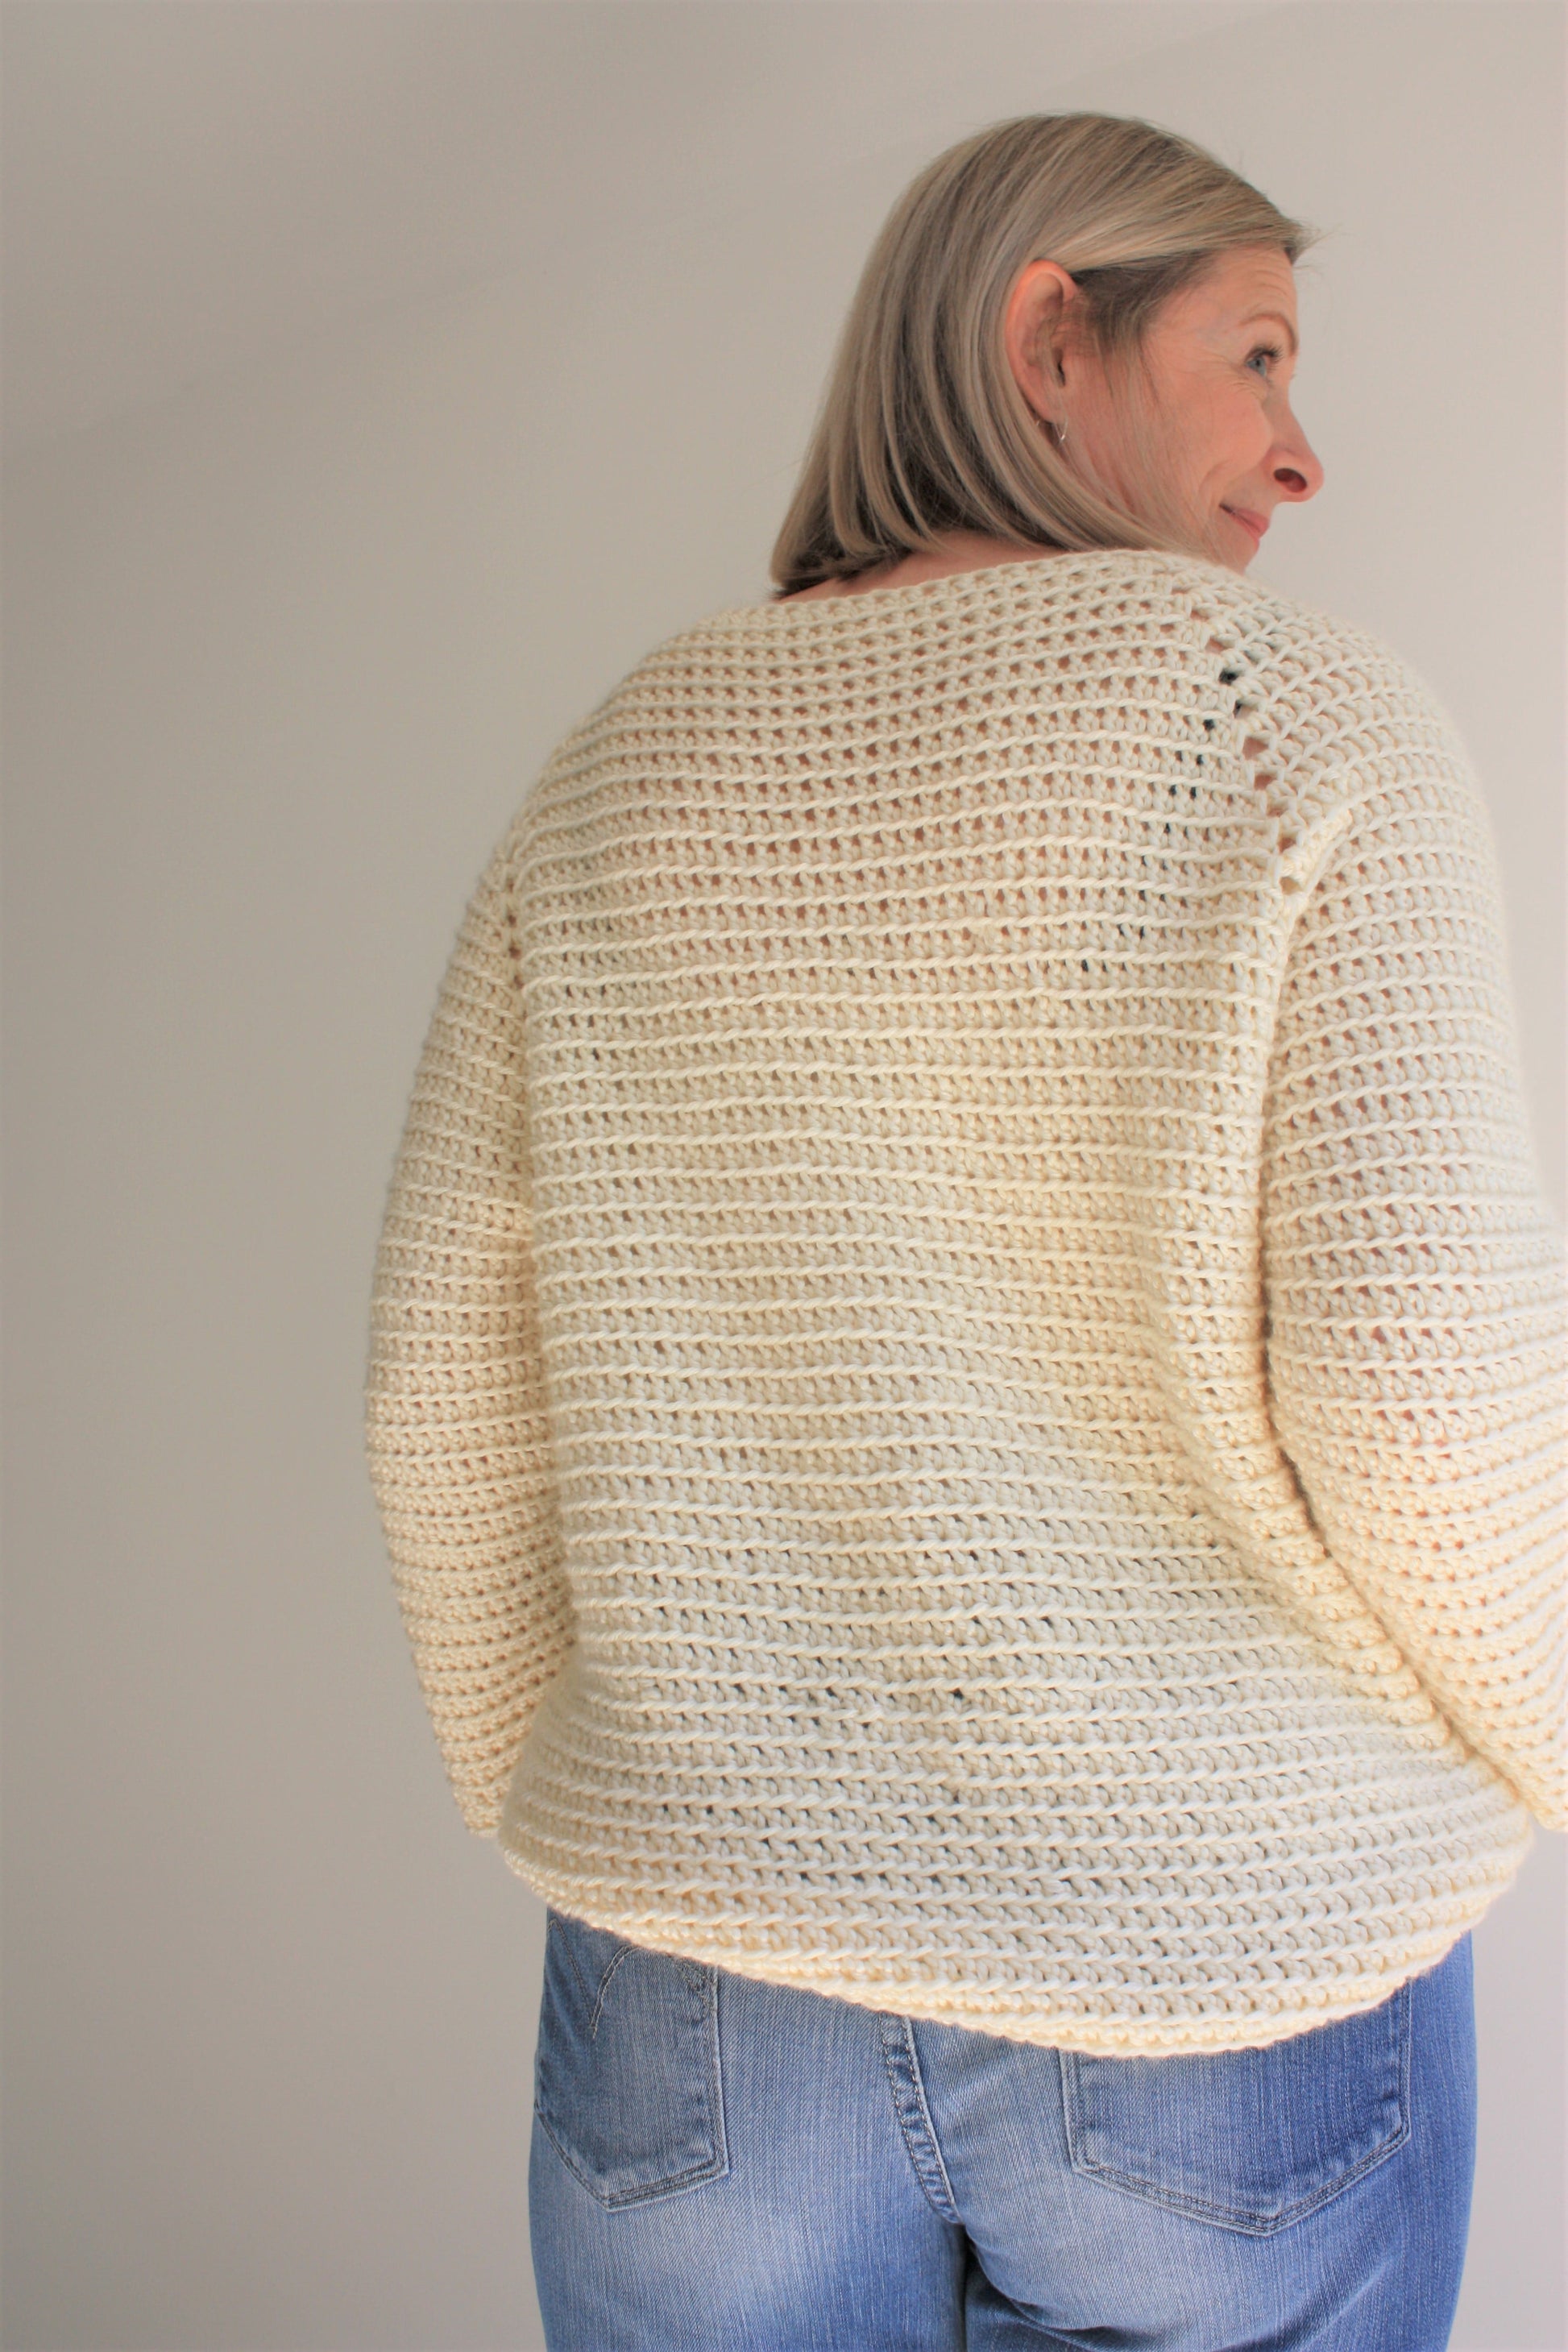 St Ives Slouchy Oversize Sweater - Easy Crochet Pattern – King & Eye